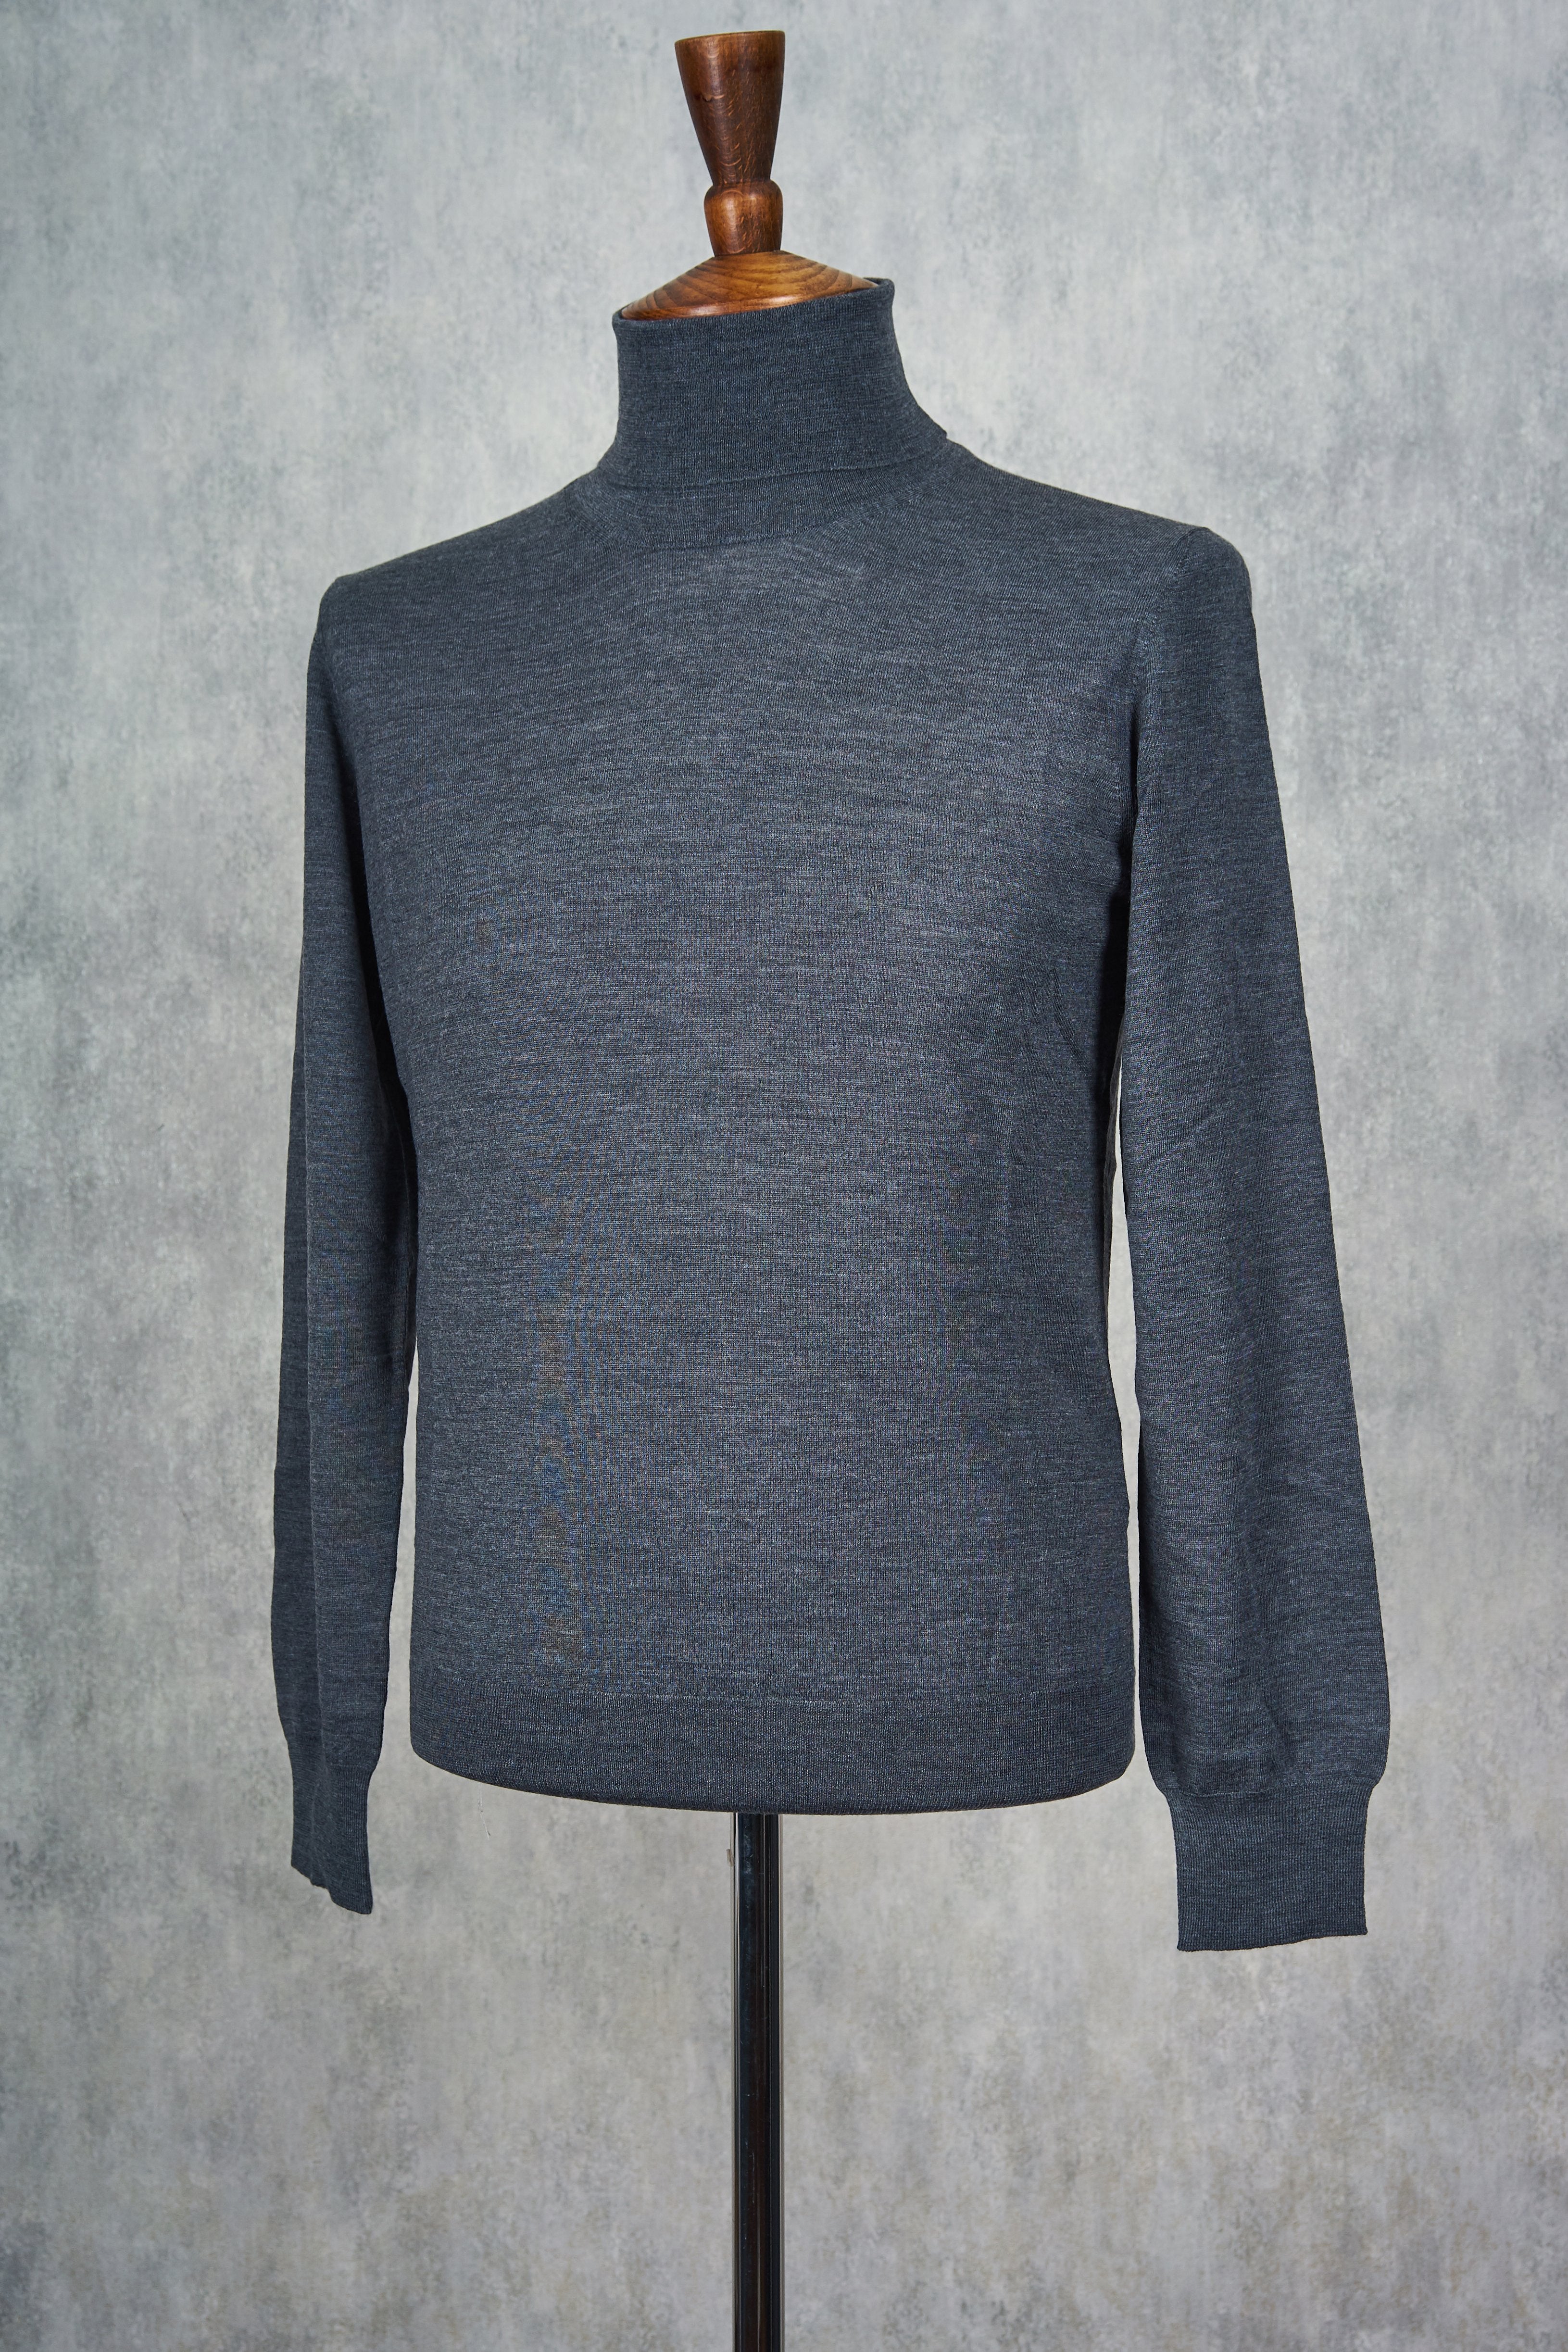 Ascot Chang Grey Extra-Fine Merino Wool Turtleneck Sweater